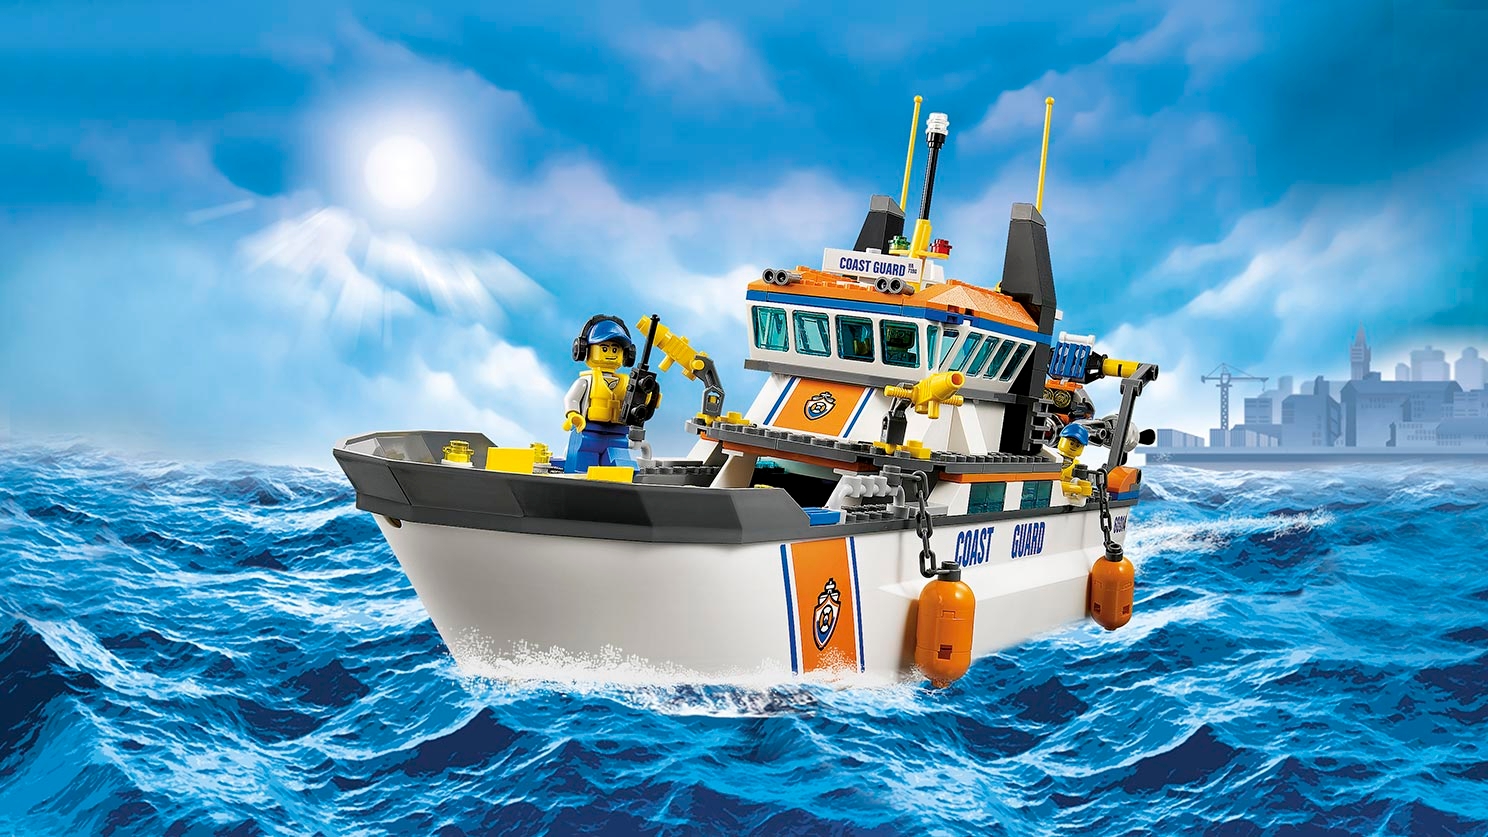 Coast Guard Patrol 60014 - City Sets - for kids